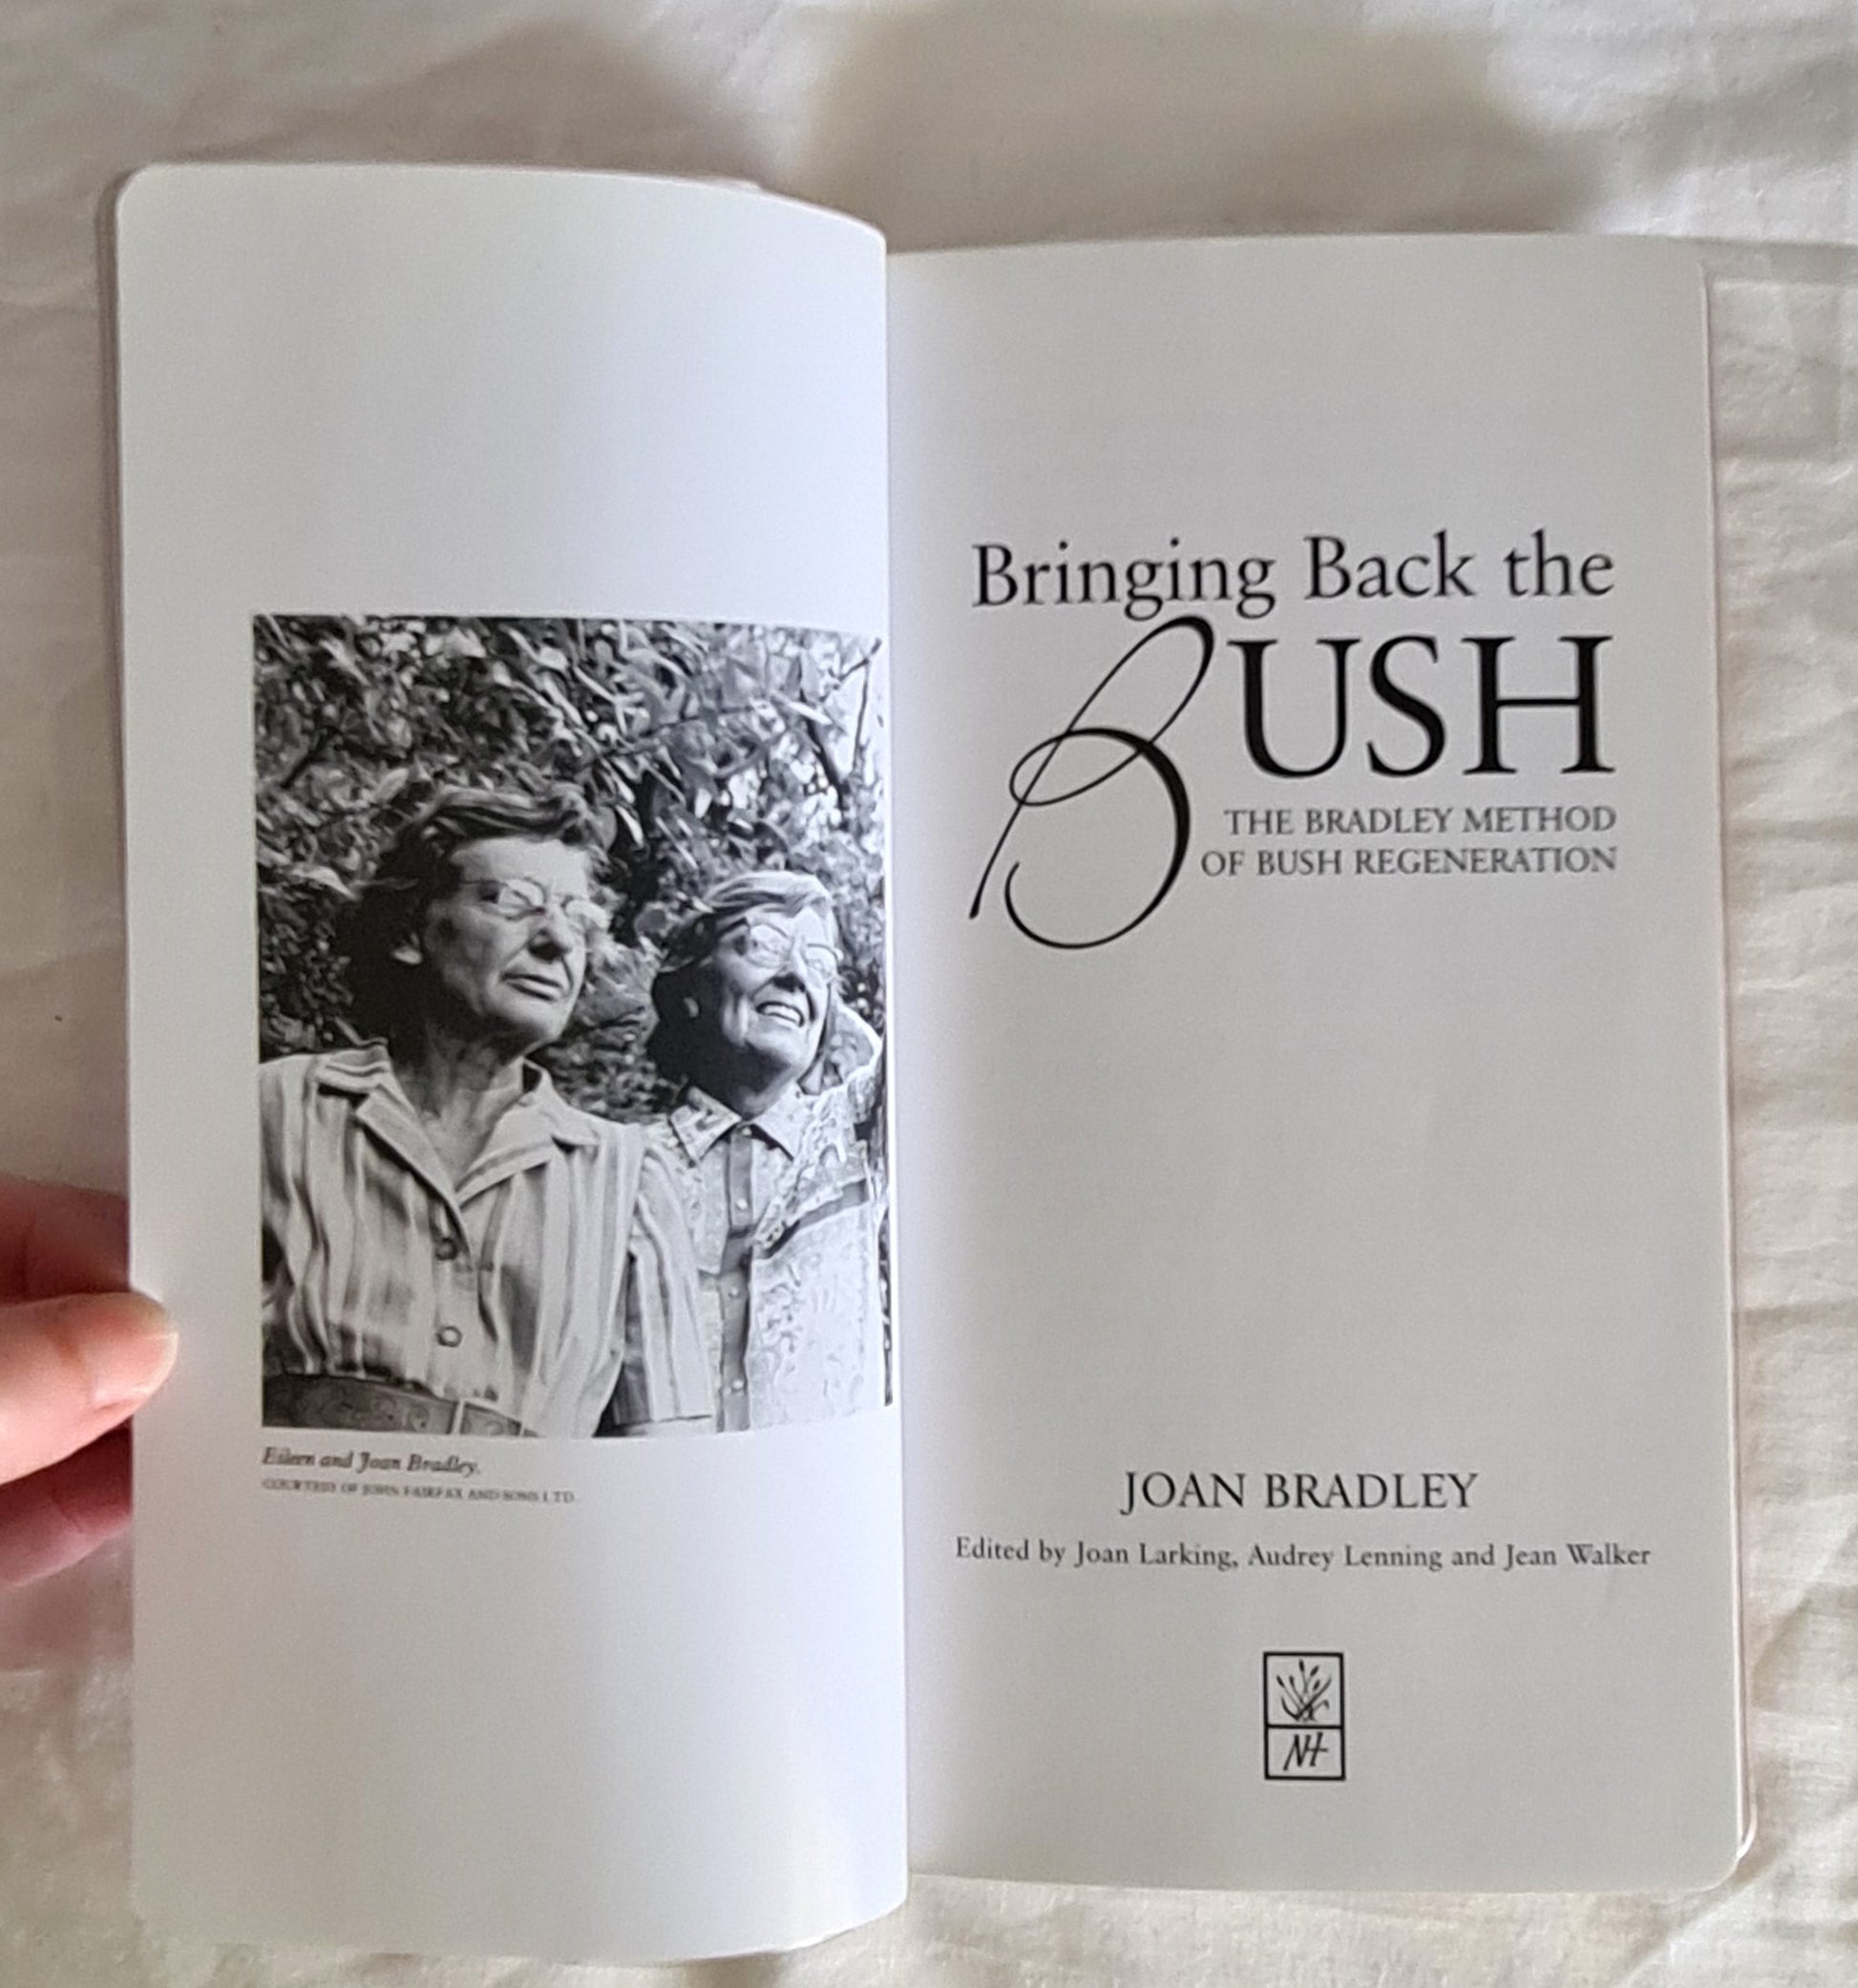 Bringing Back the Bush  The Bradley Method of Bush Regeneration  by Joan Bradley